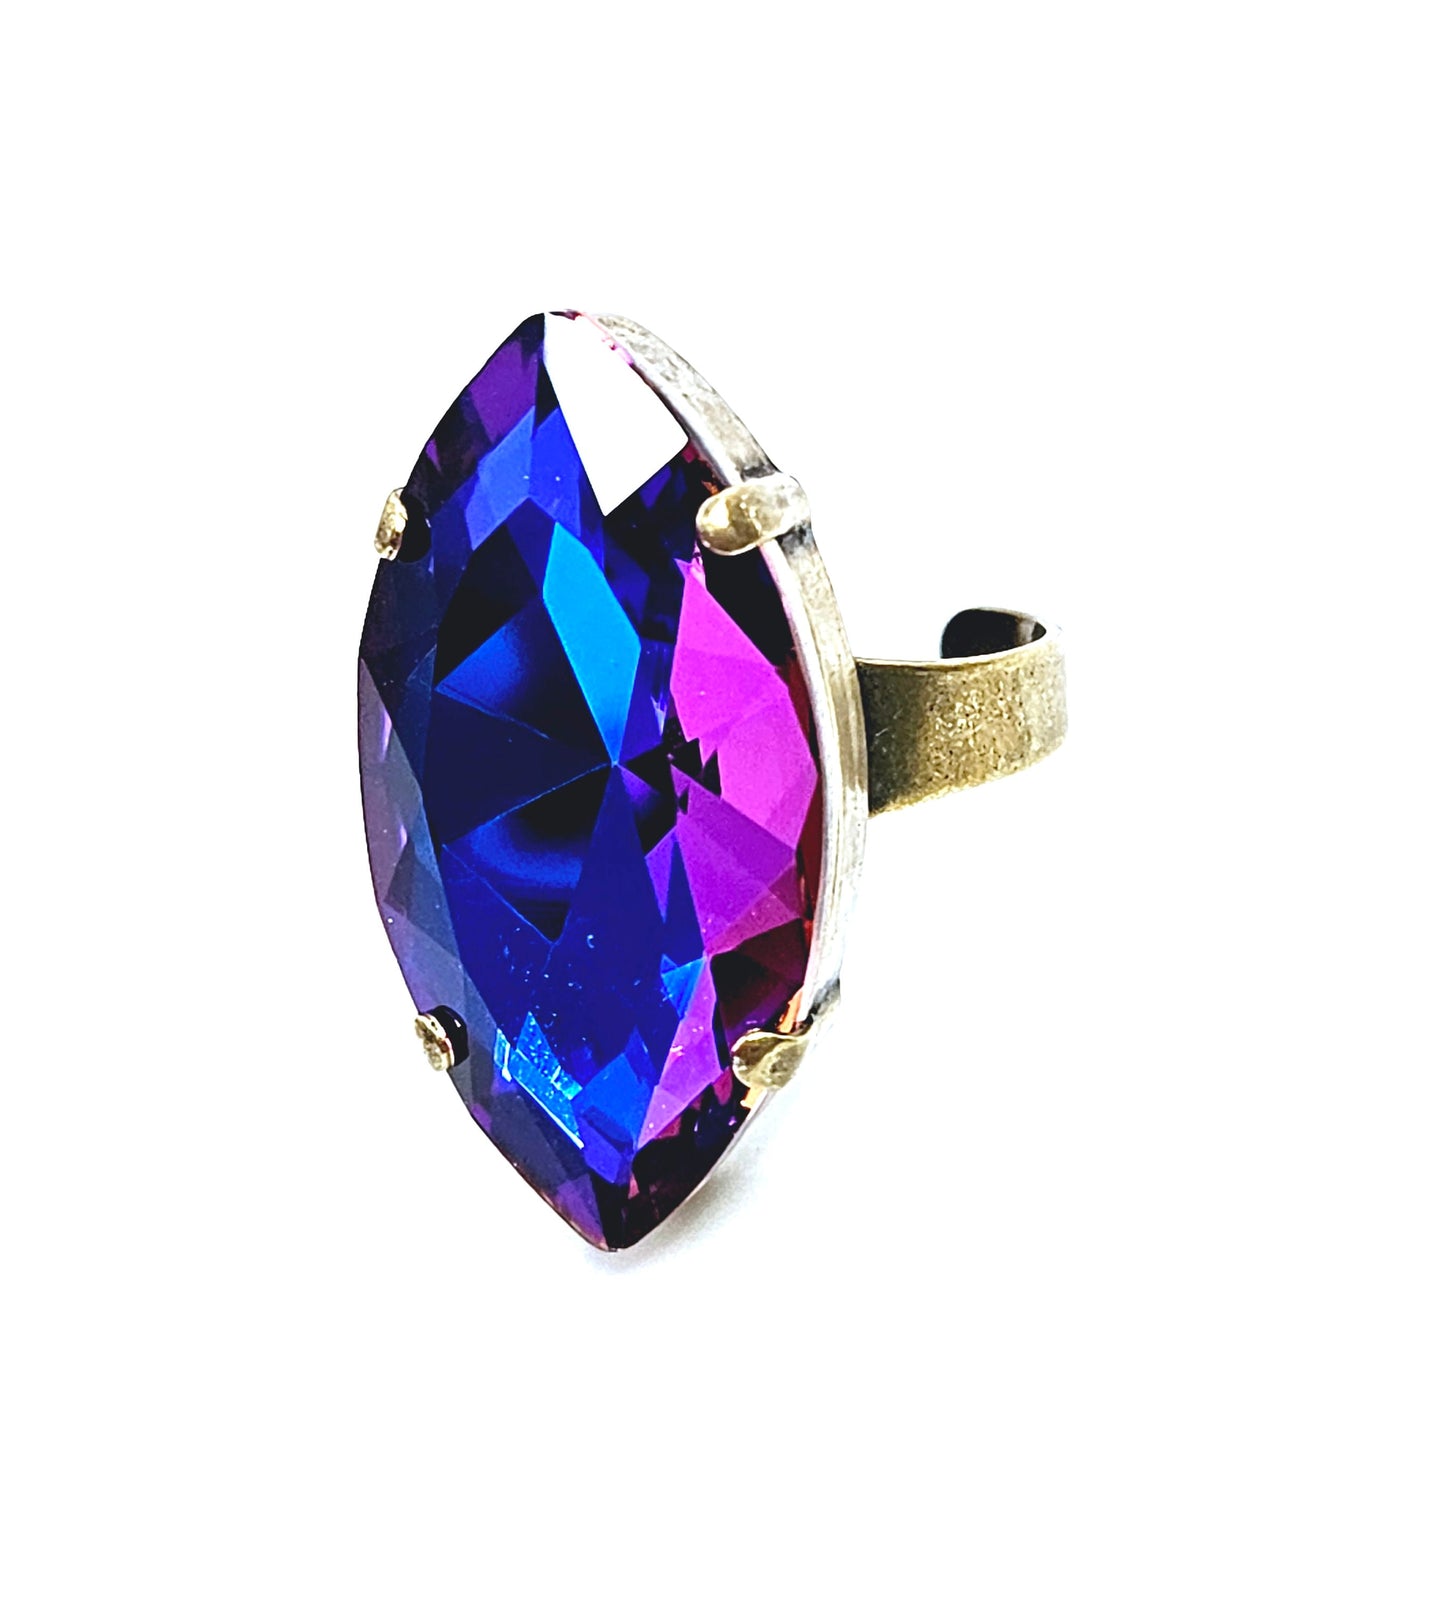 Large Violet Blue Crystal Ring, Large Purple Blue Statement Ring, Antique Brass, Georgian Collet, Vintage Style, Rings For Women, Dark Red Navette